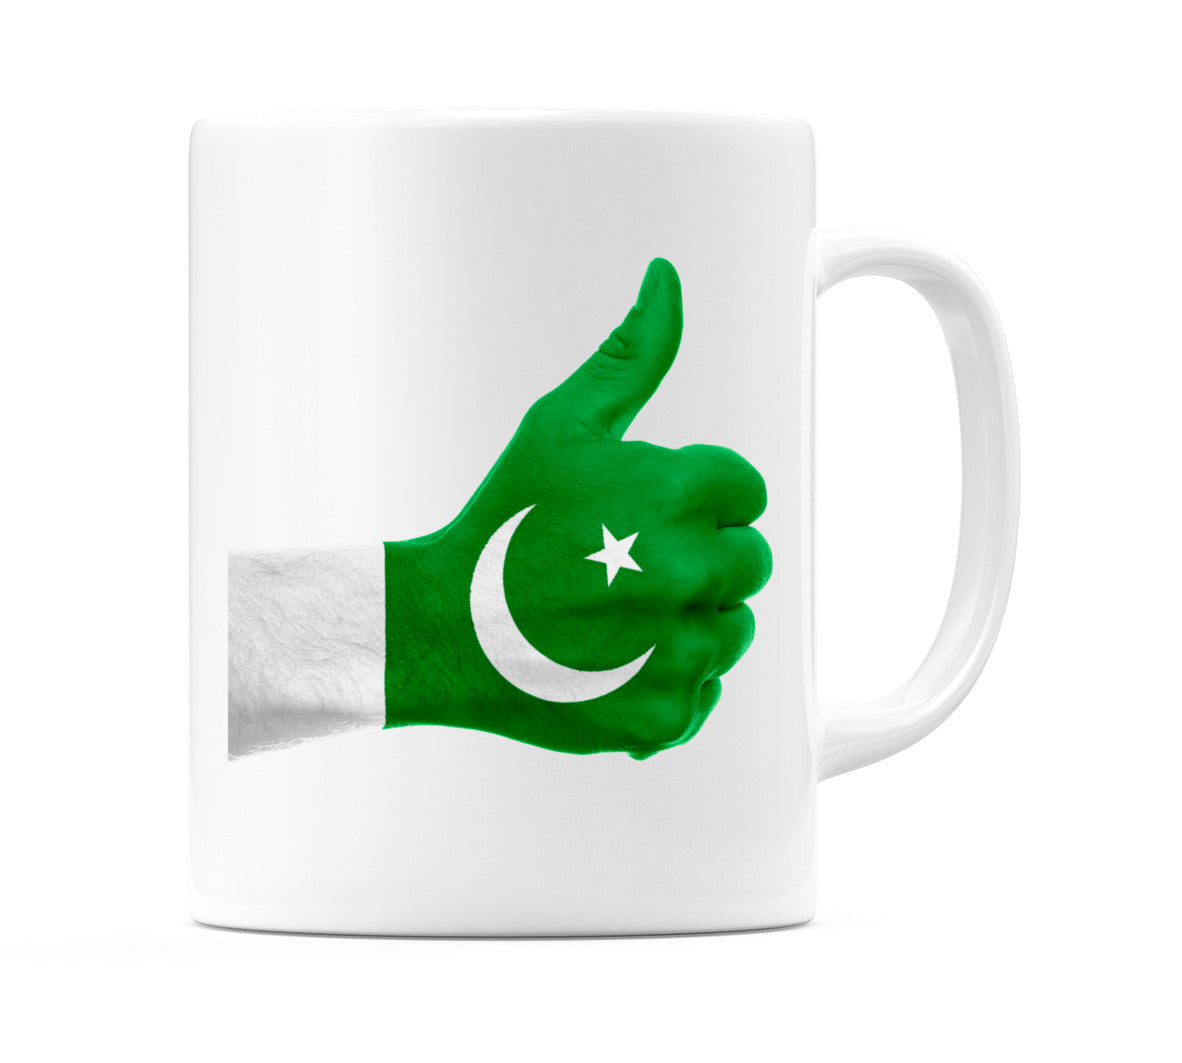 Pakistan Thumbs up Flag Mug